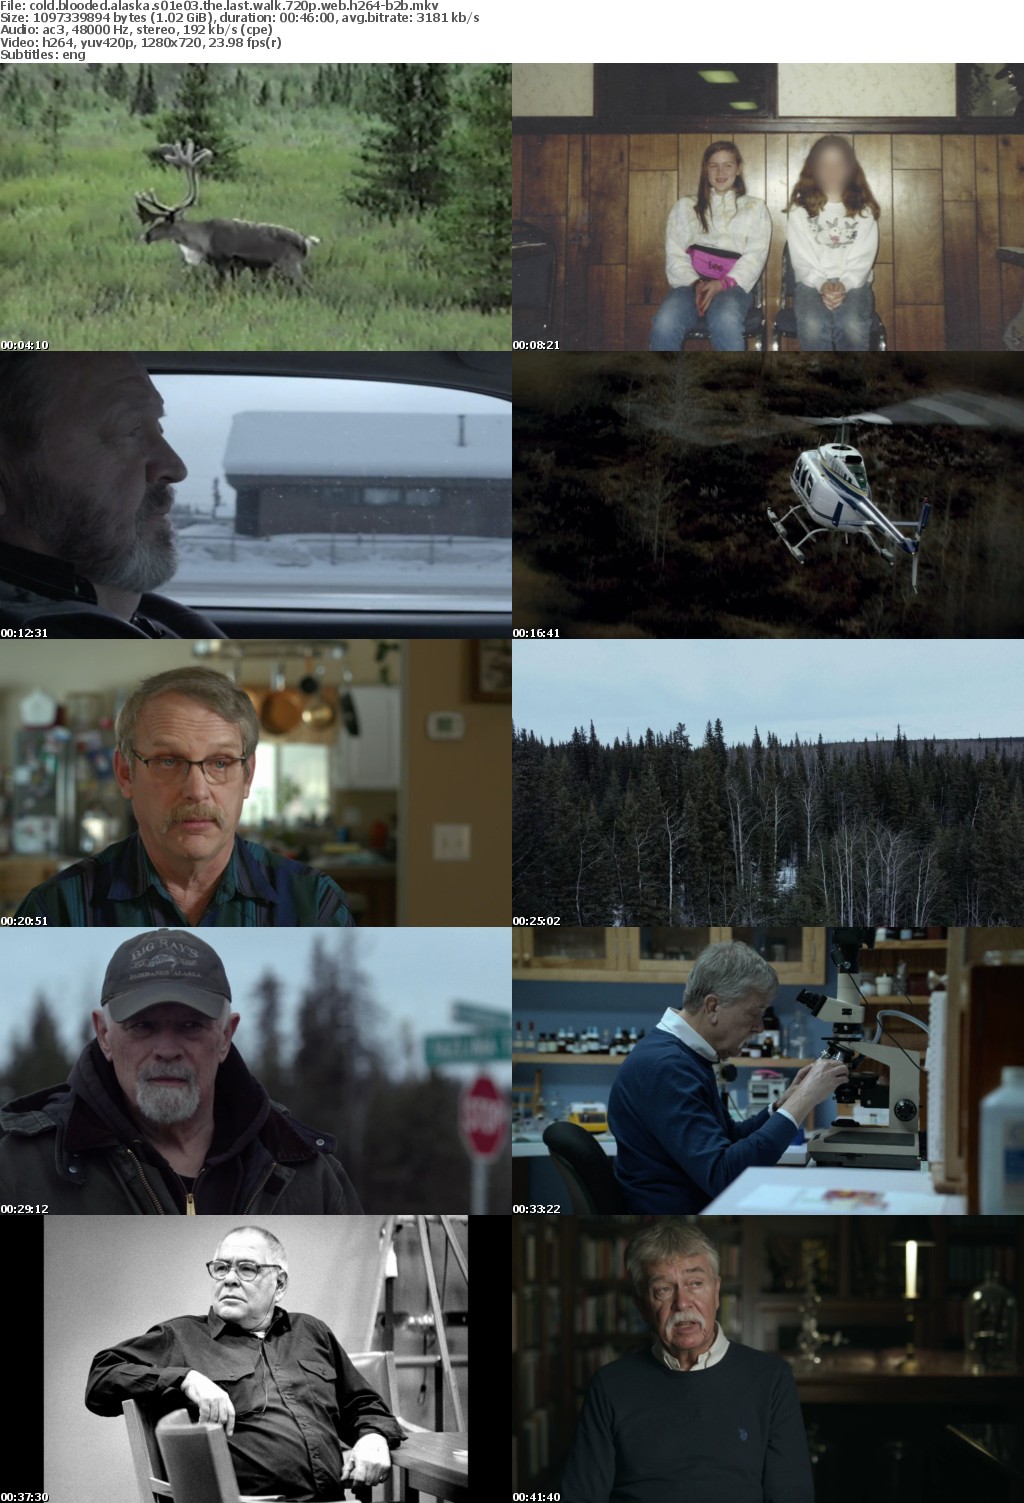 Cold Blooded Alaska S01E03 The Last Walk 720p WEB h264-B2B